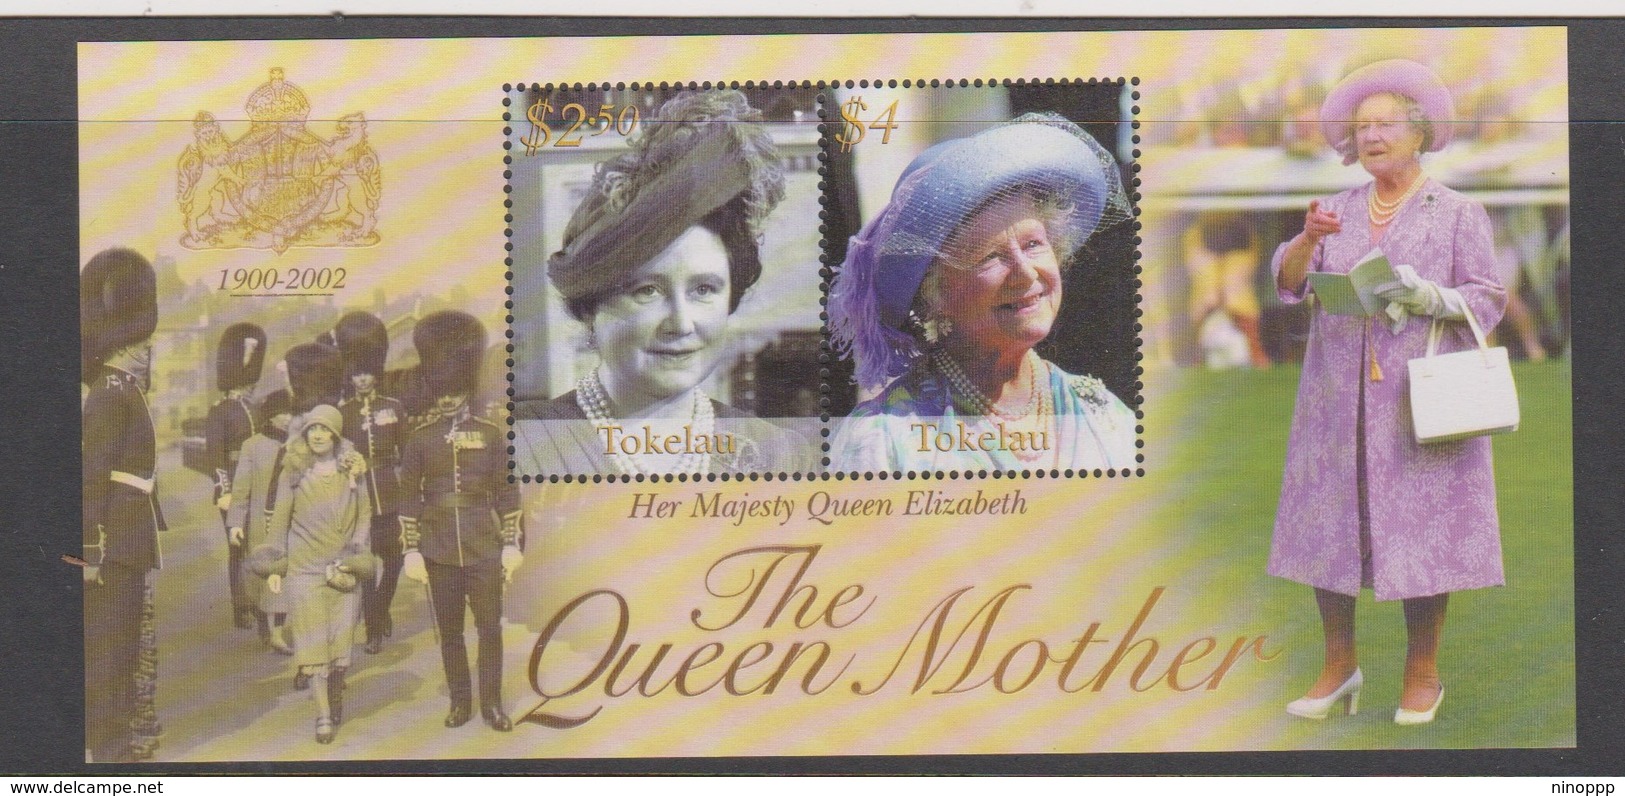 Tokelau SG MS 350 2002 Queen Mother Memorial,miniature Sheet,mint Never Hinged - Tokelau